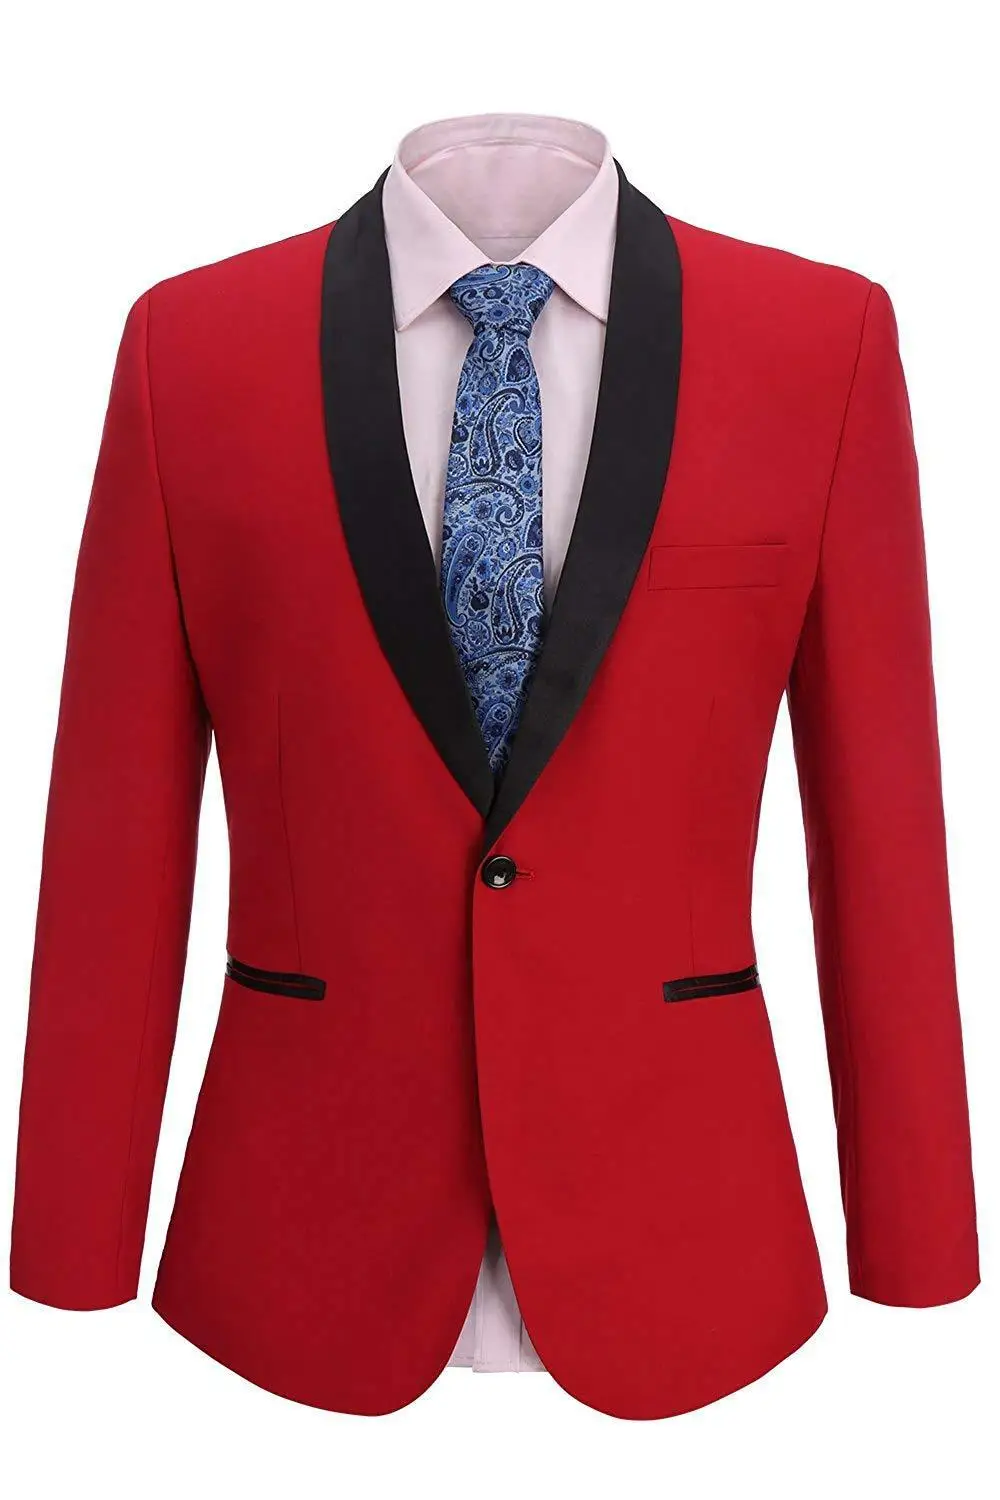 Red Suit Black Lapel Men Wedding Slim Fit jacket Coat Tuxedo Groomsman Custom custom made to measure men suit bespoke black tuxedo with red edge and red vest